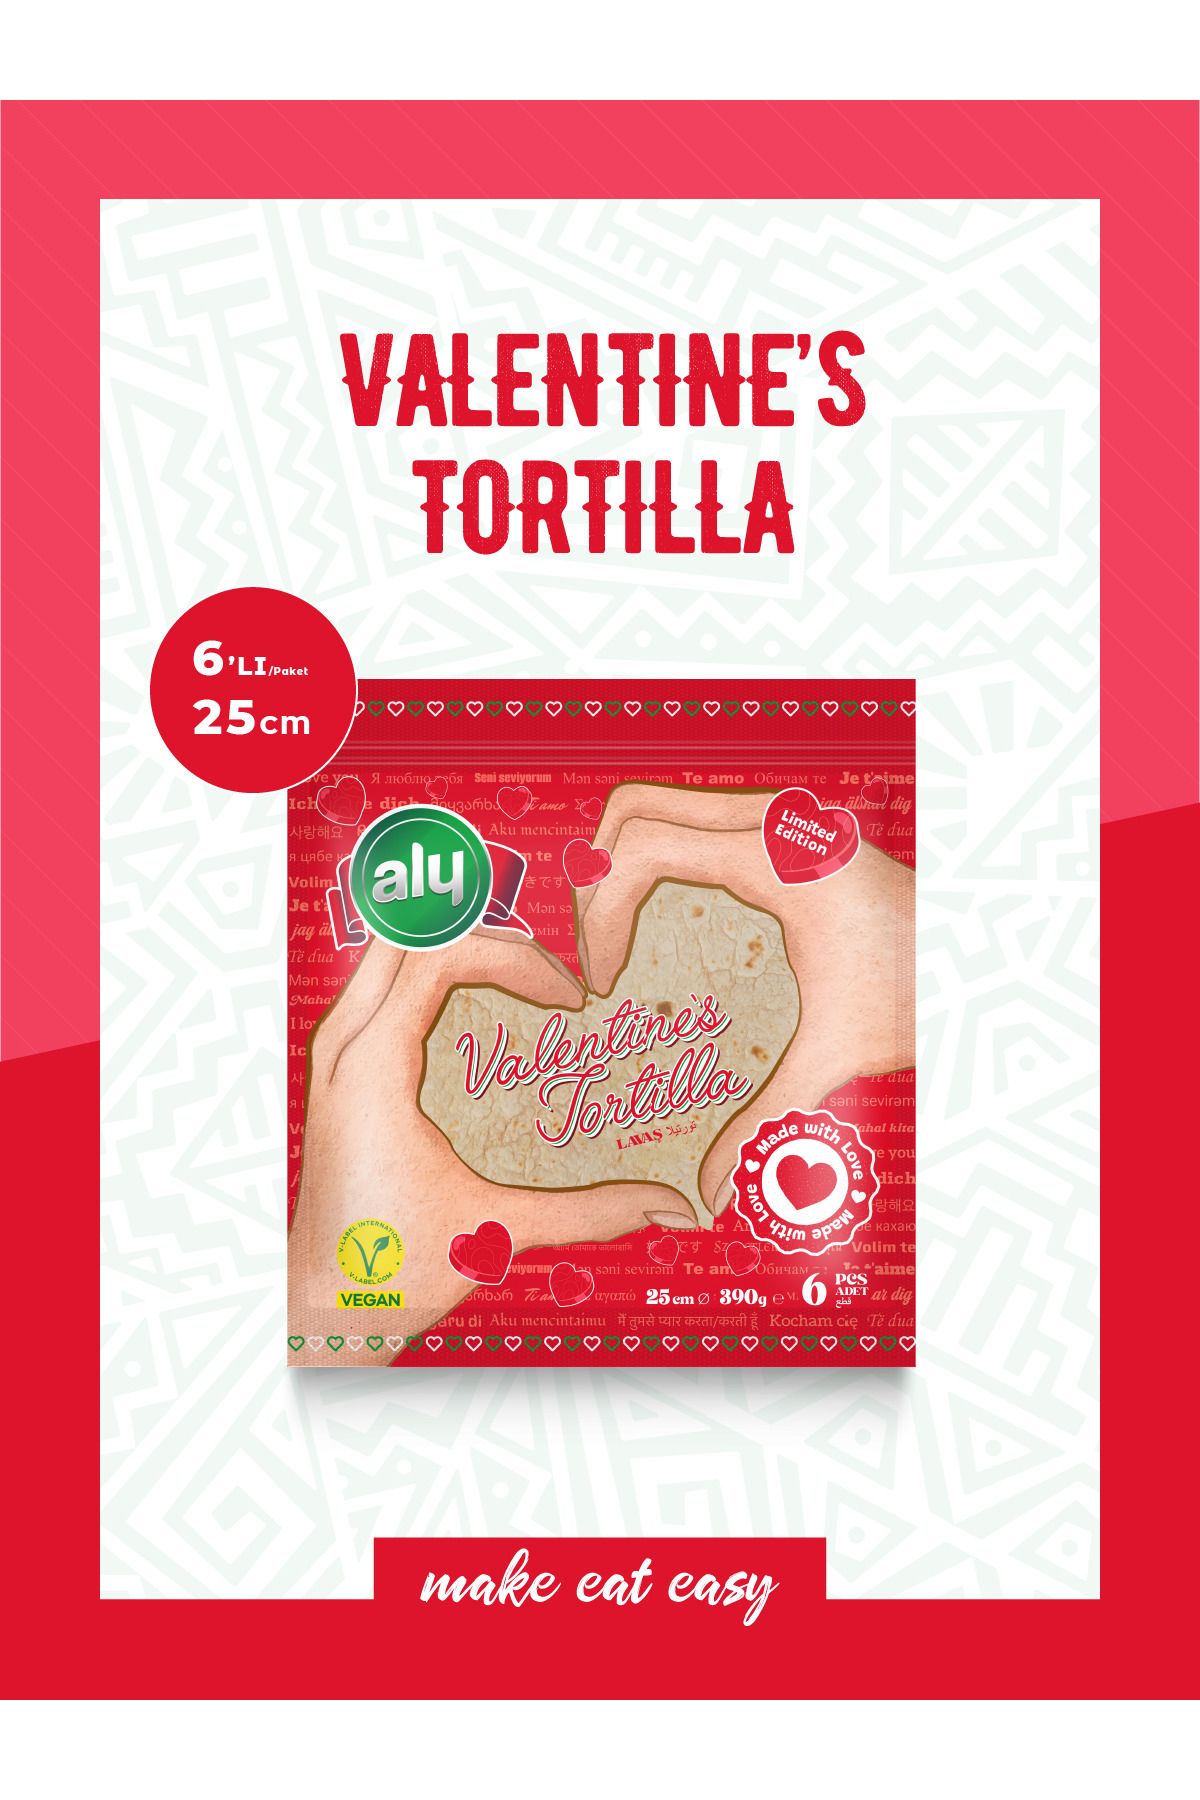 Aly Valentine's Tortilla Lavaş 25 Cm 6'lı Paket 390g